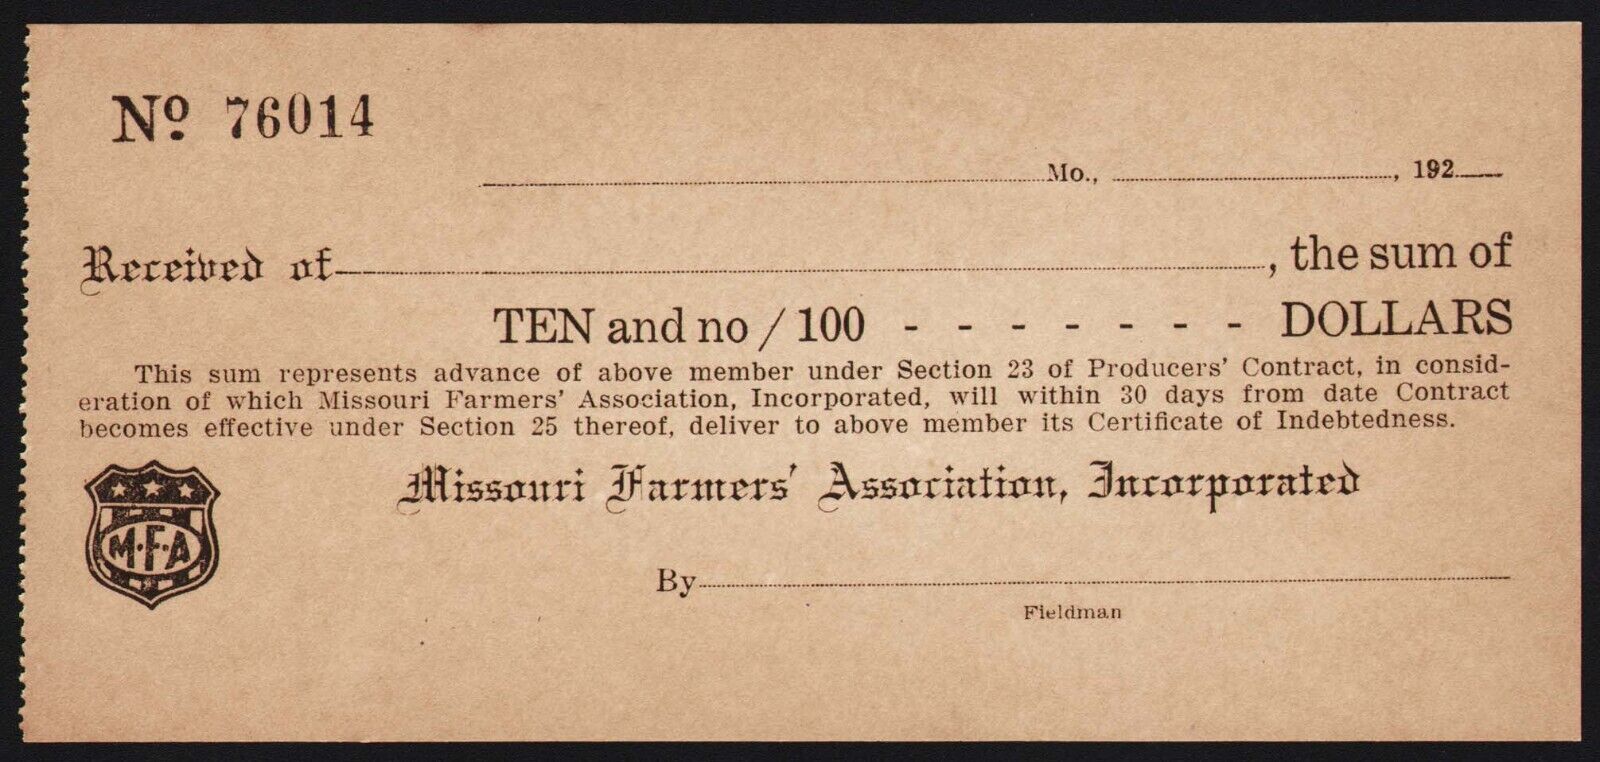 Vintage receipt M F A Missouri Farmers Association dues dated 1920s unused exc++